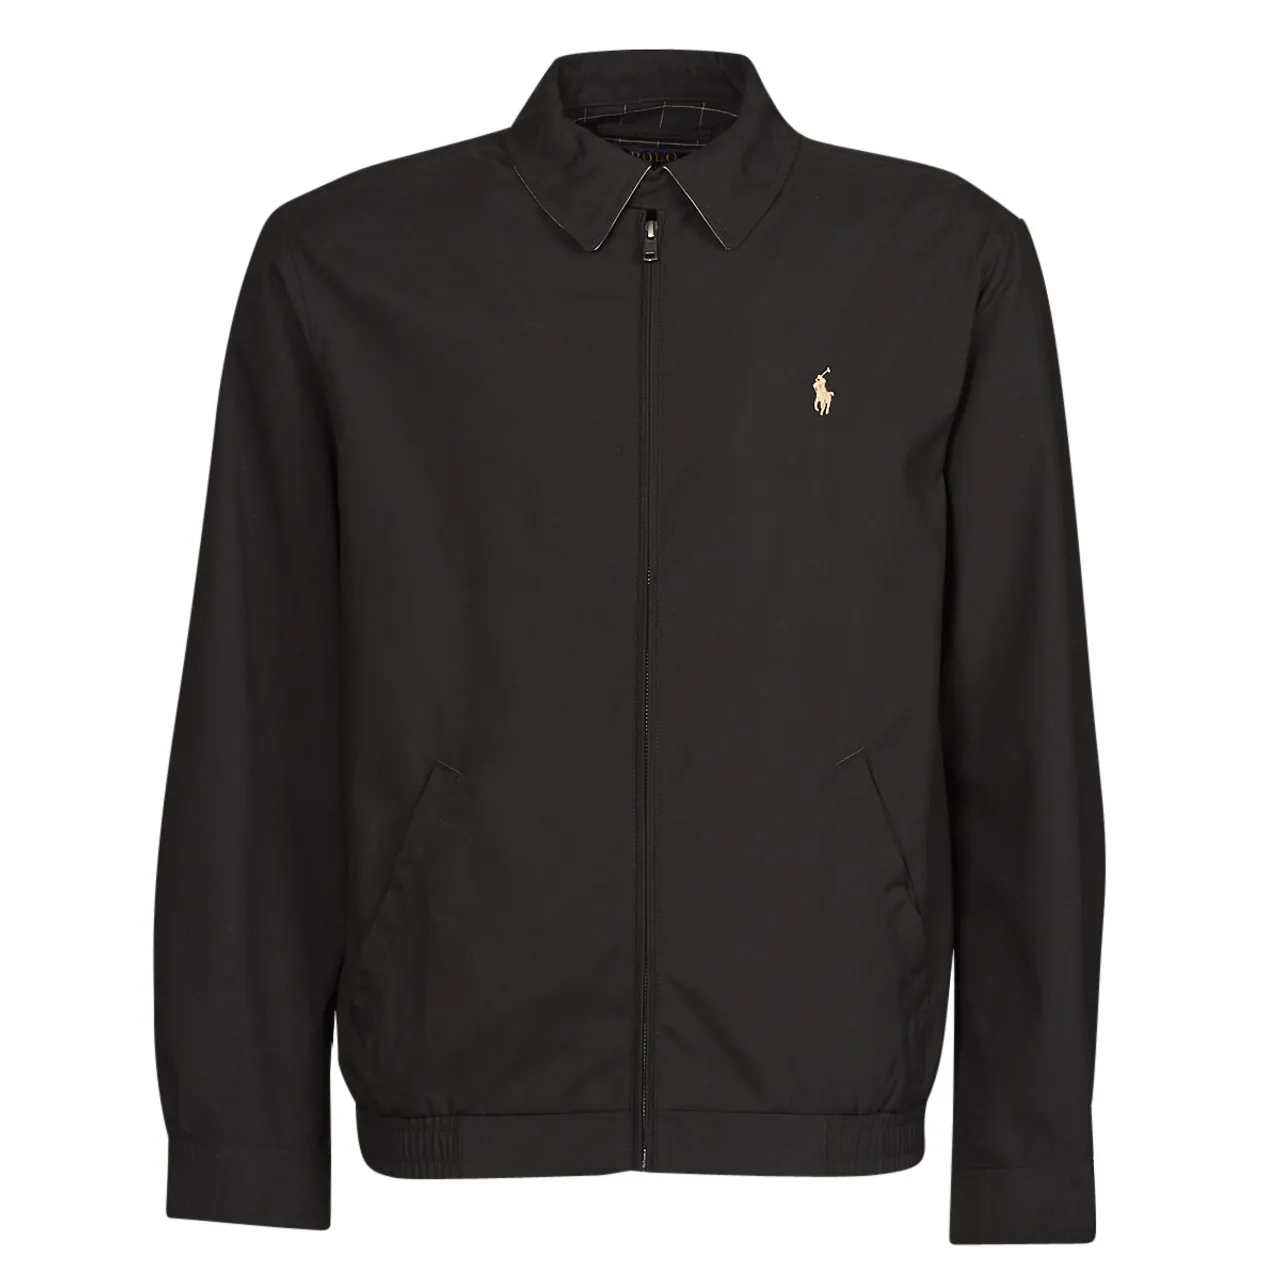 Polo Ralph Lauren  POLYESTER MICRO-BI-SWING WB  men's Jacket in Black